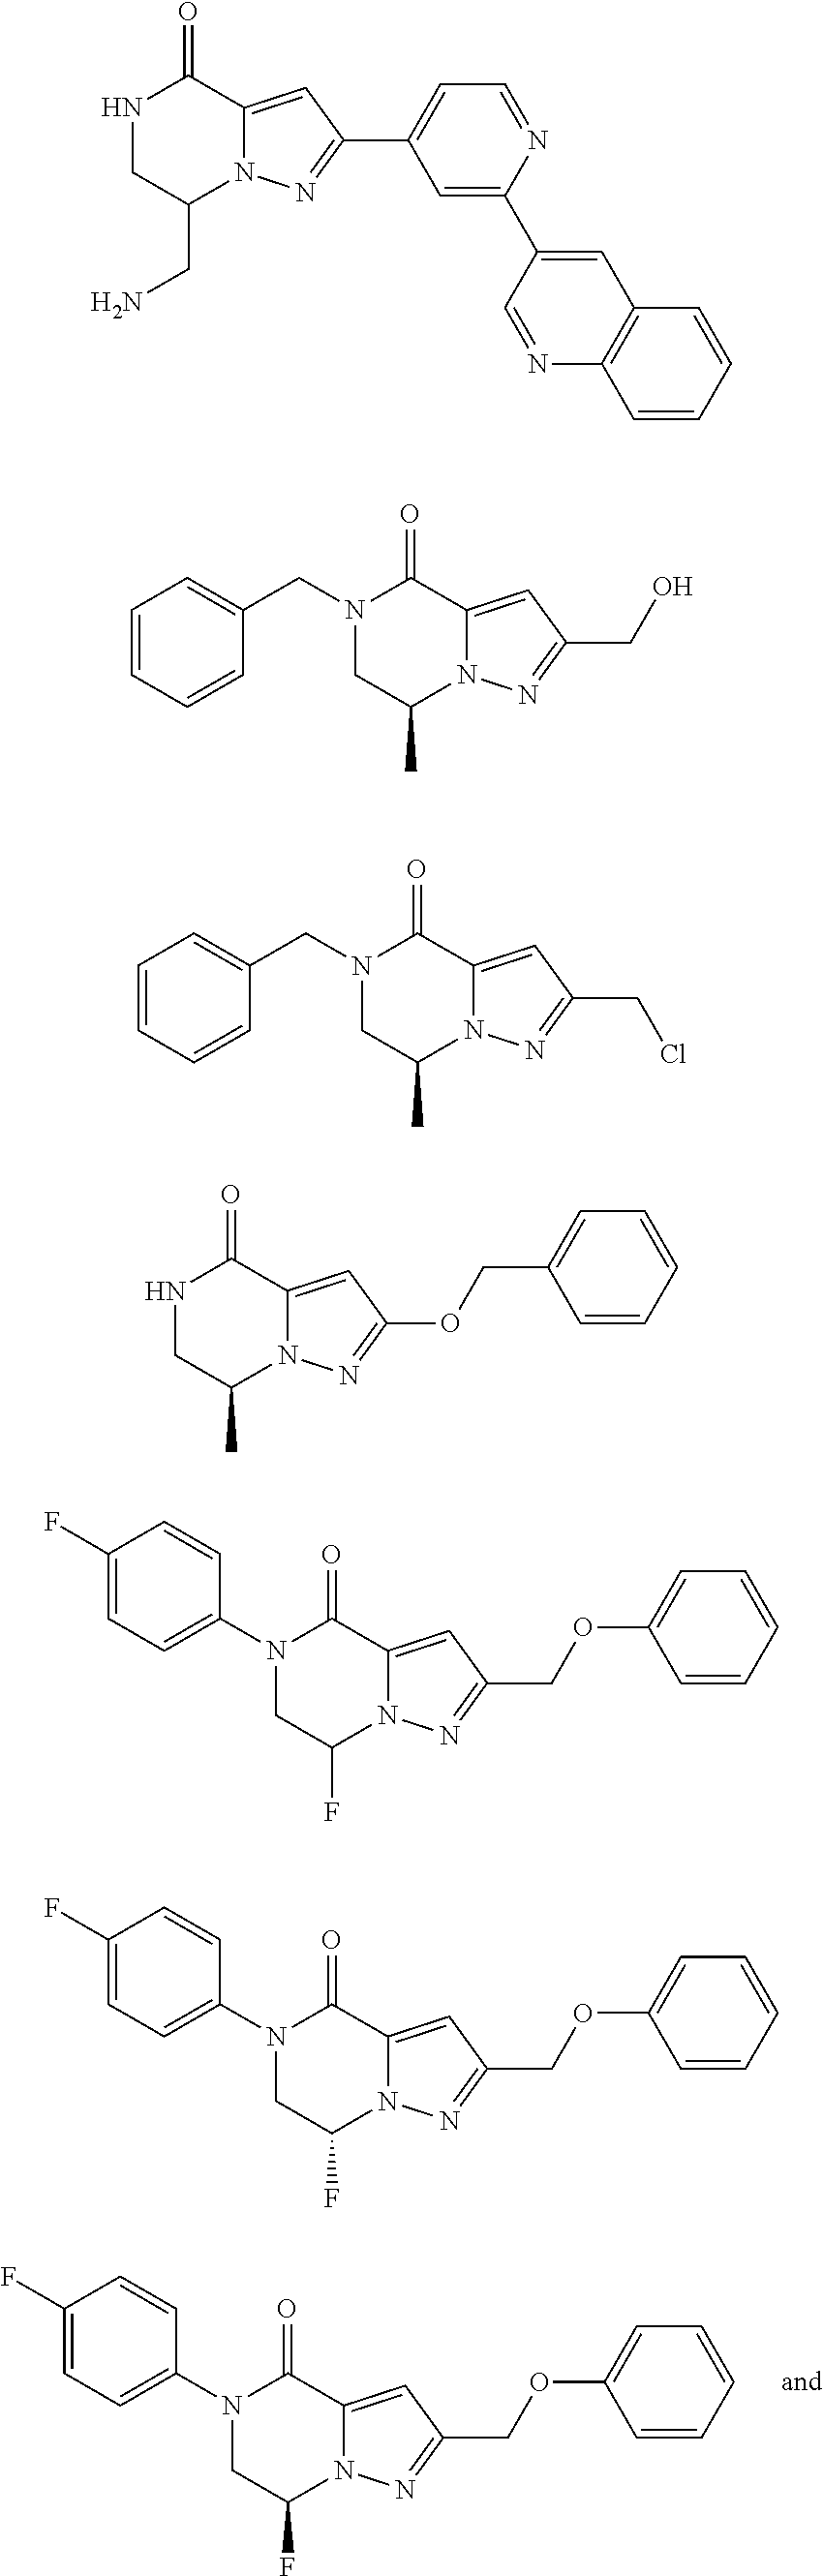 Fused pyrazole derivative having autotaxin inhibitory activity